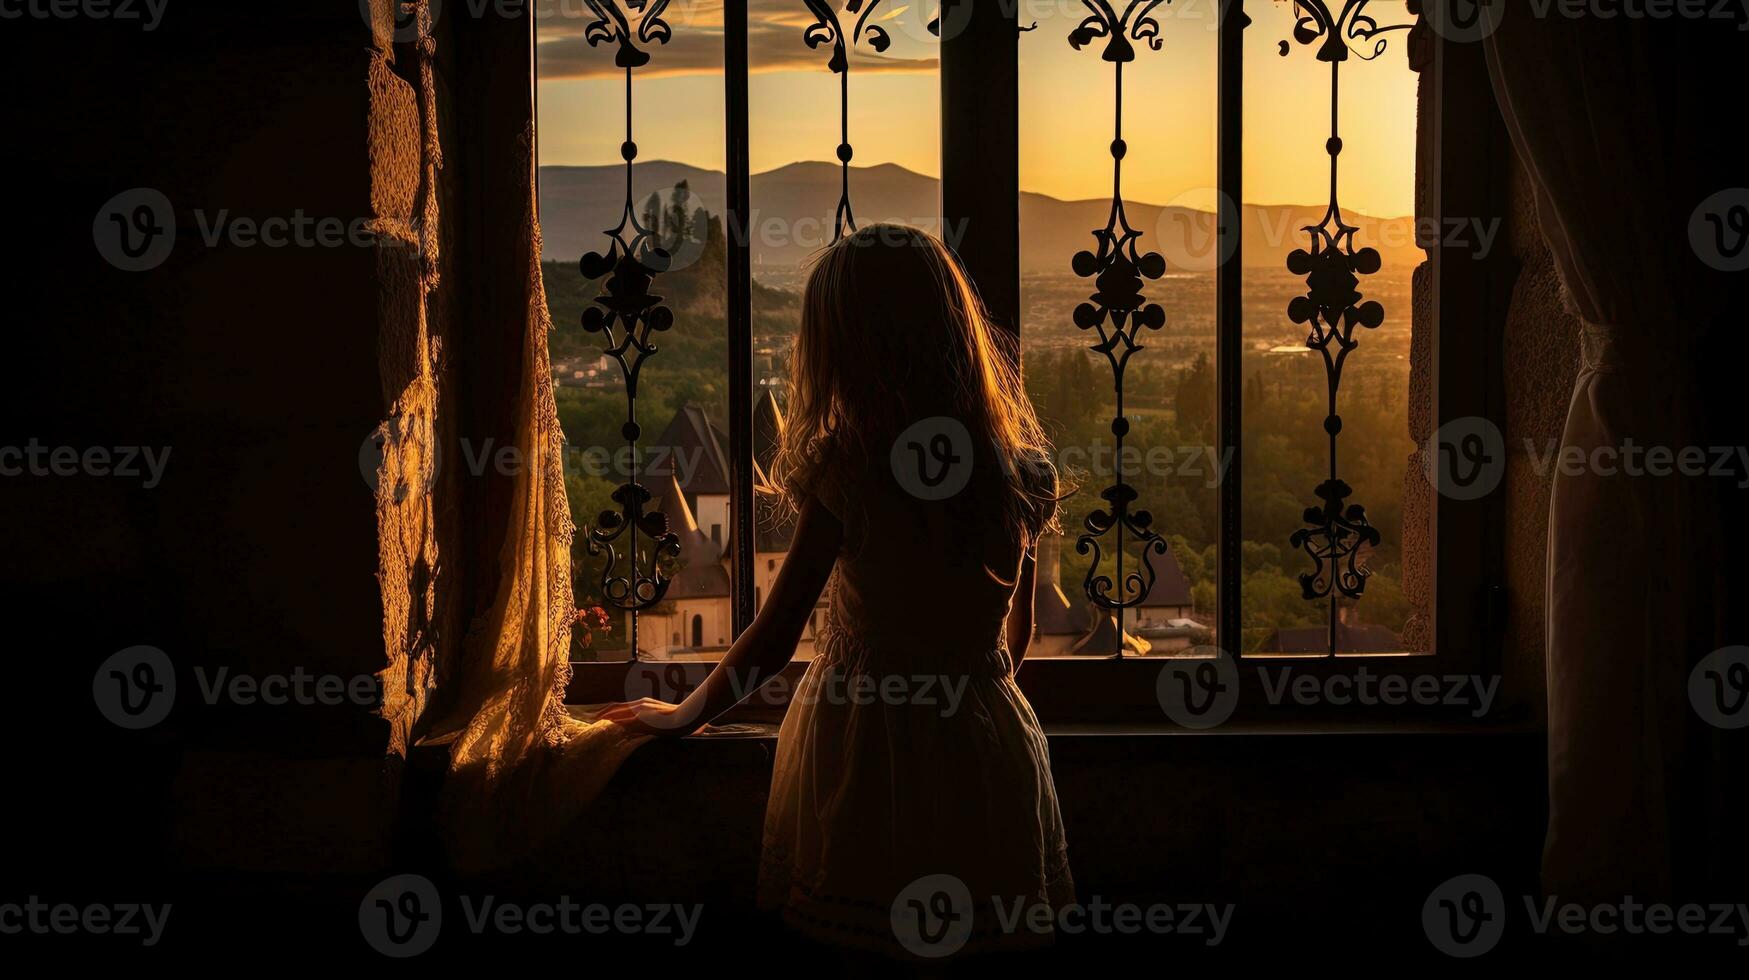 Hongaars kasteel s venster opening met meisje in moekatsjevo. silhouet concept foto